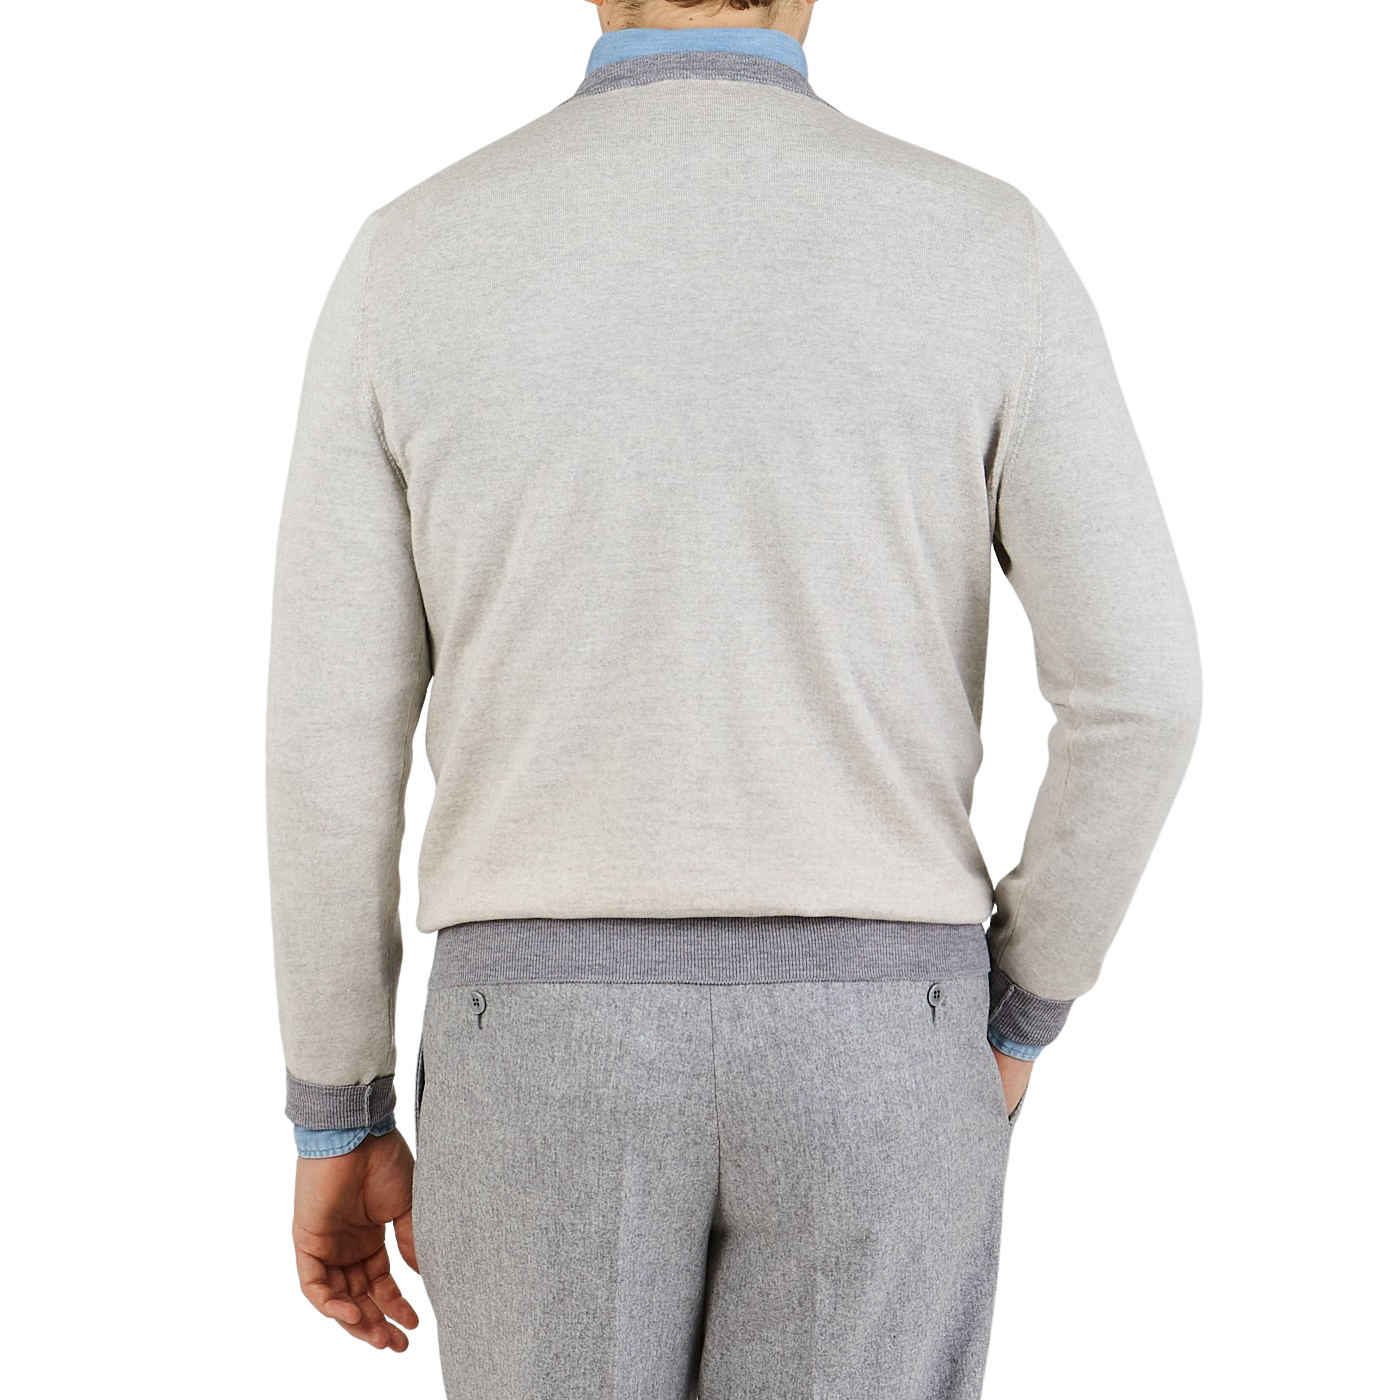 Canali Beige Grey Merino Wool College Sweater Back